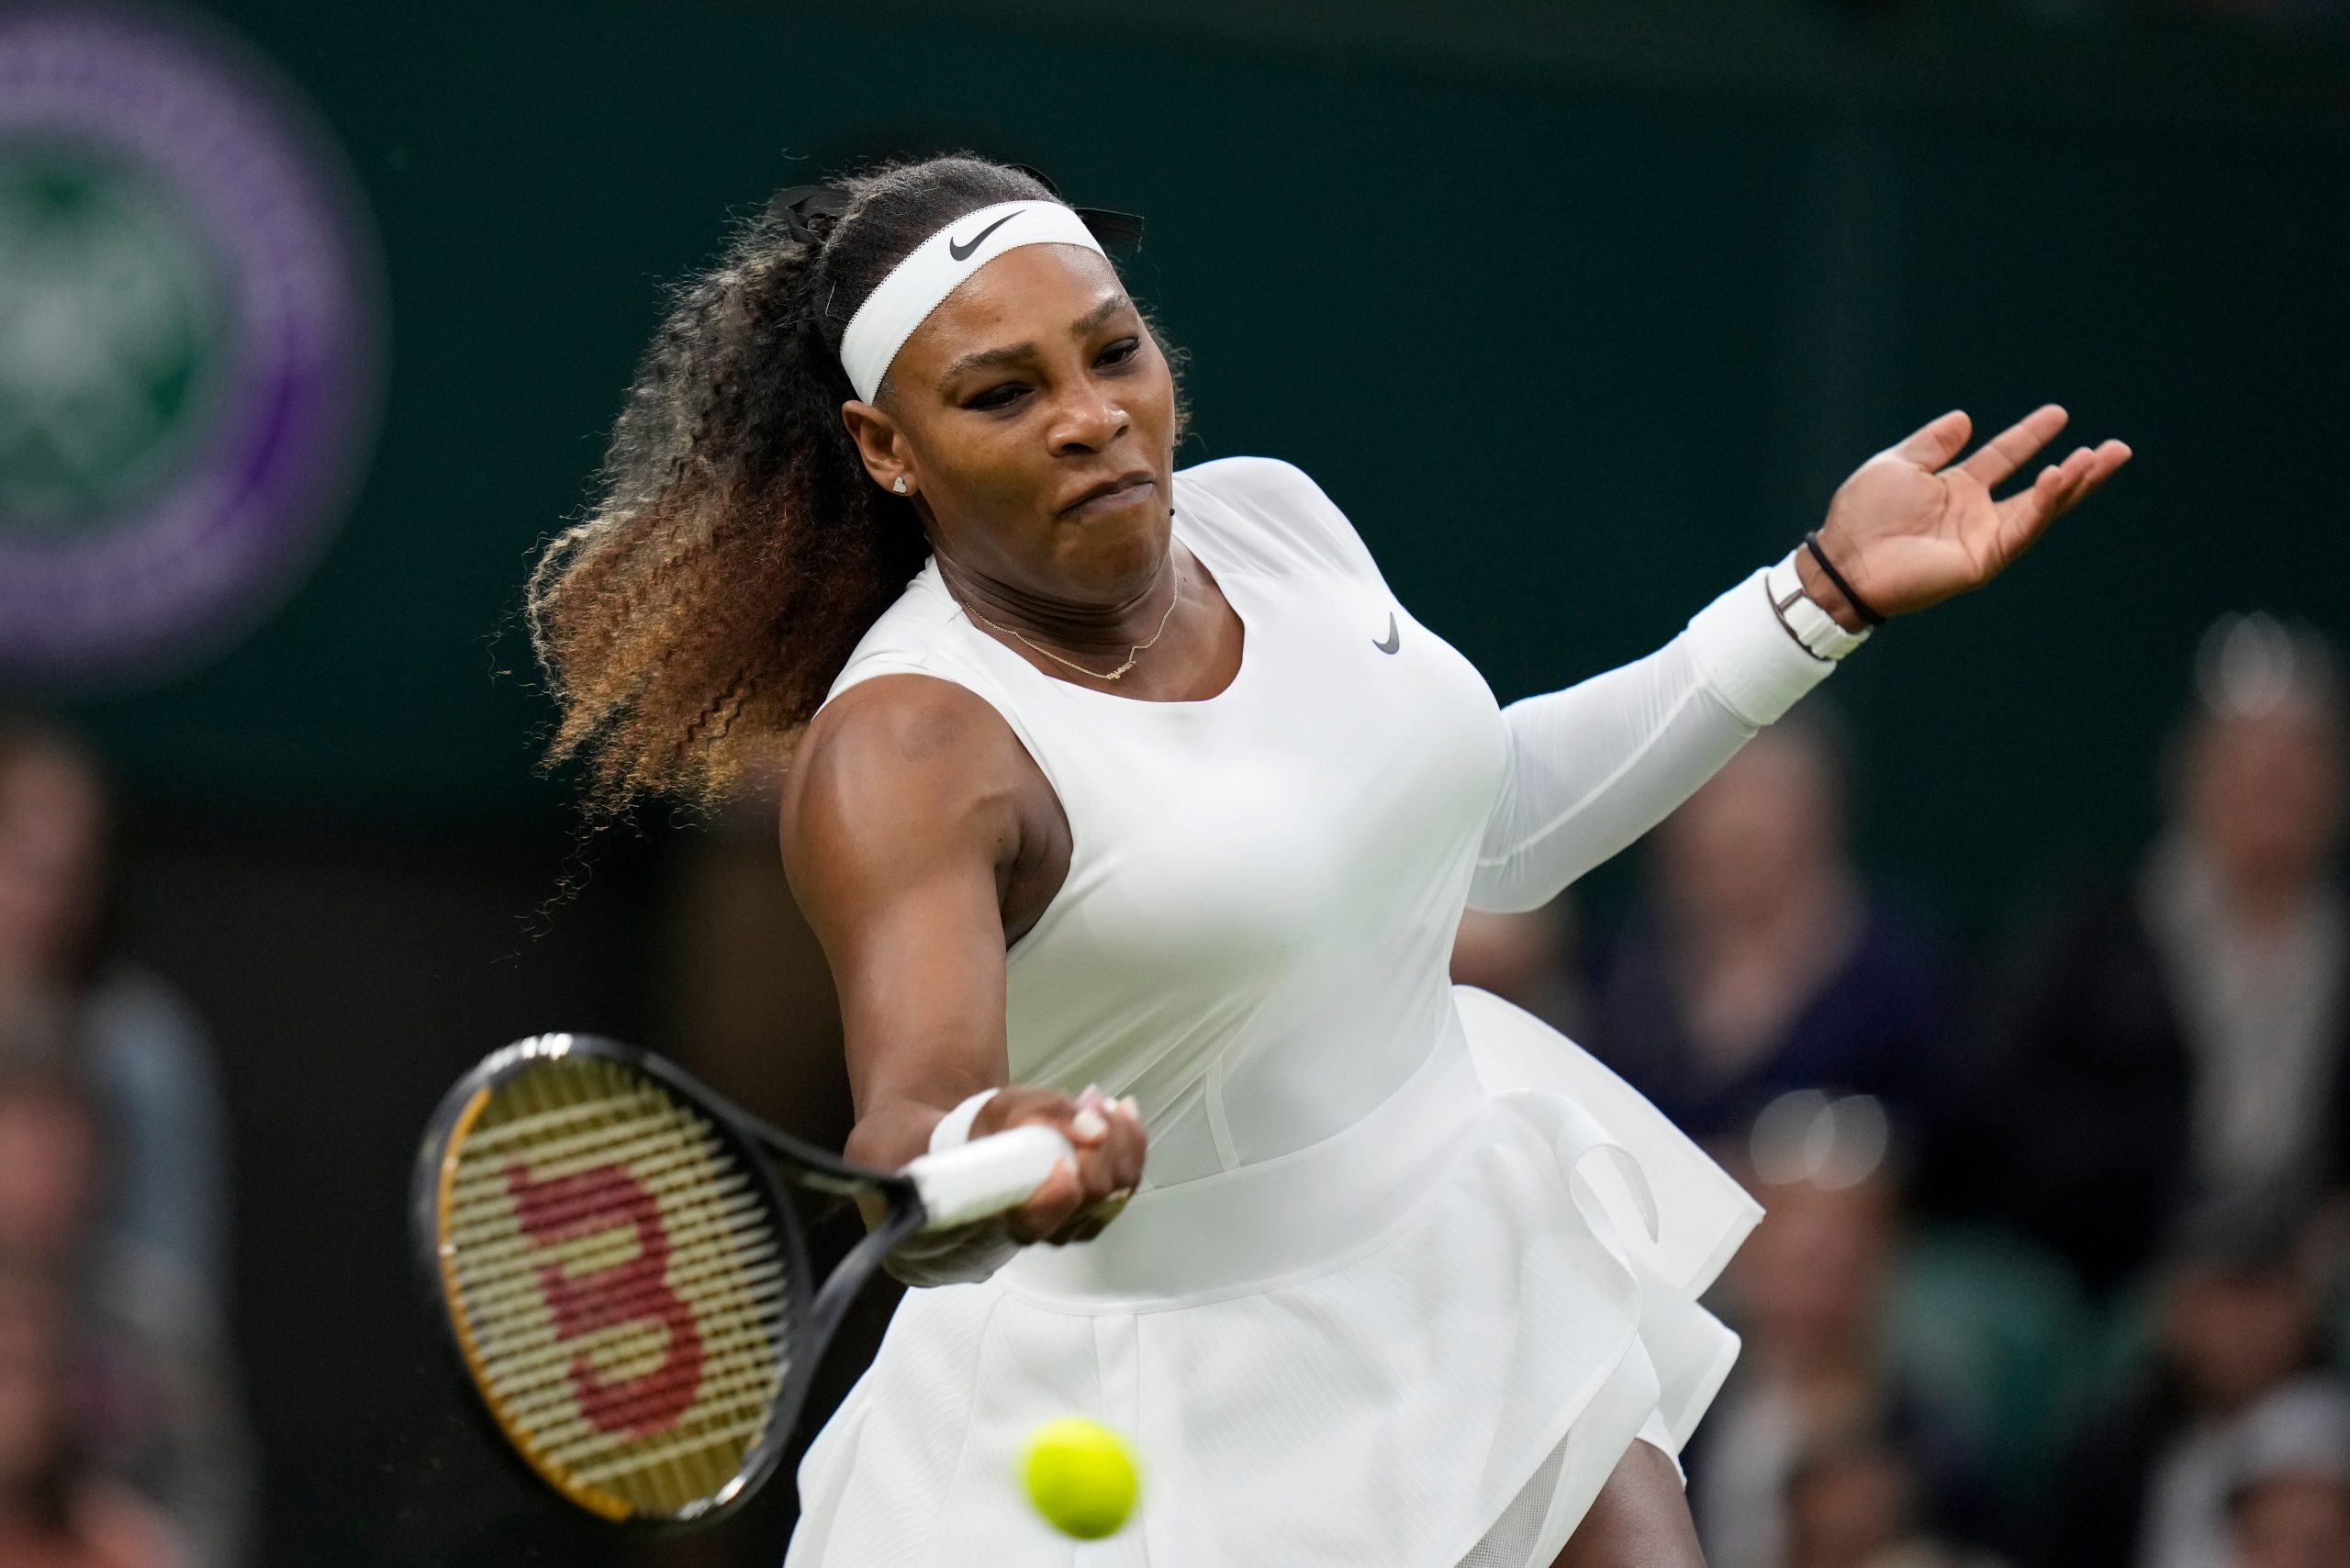 Queen back in the kingdom: Serena Williams set to make tennis comeback